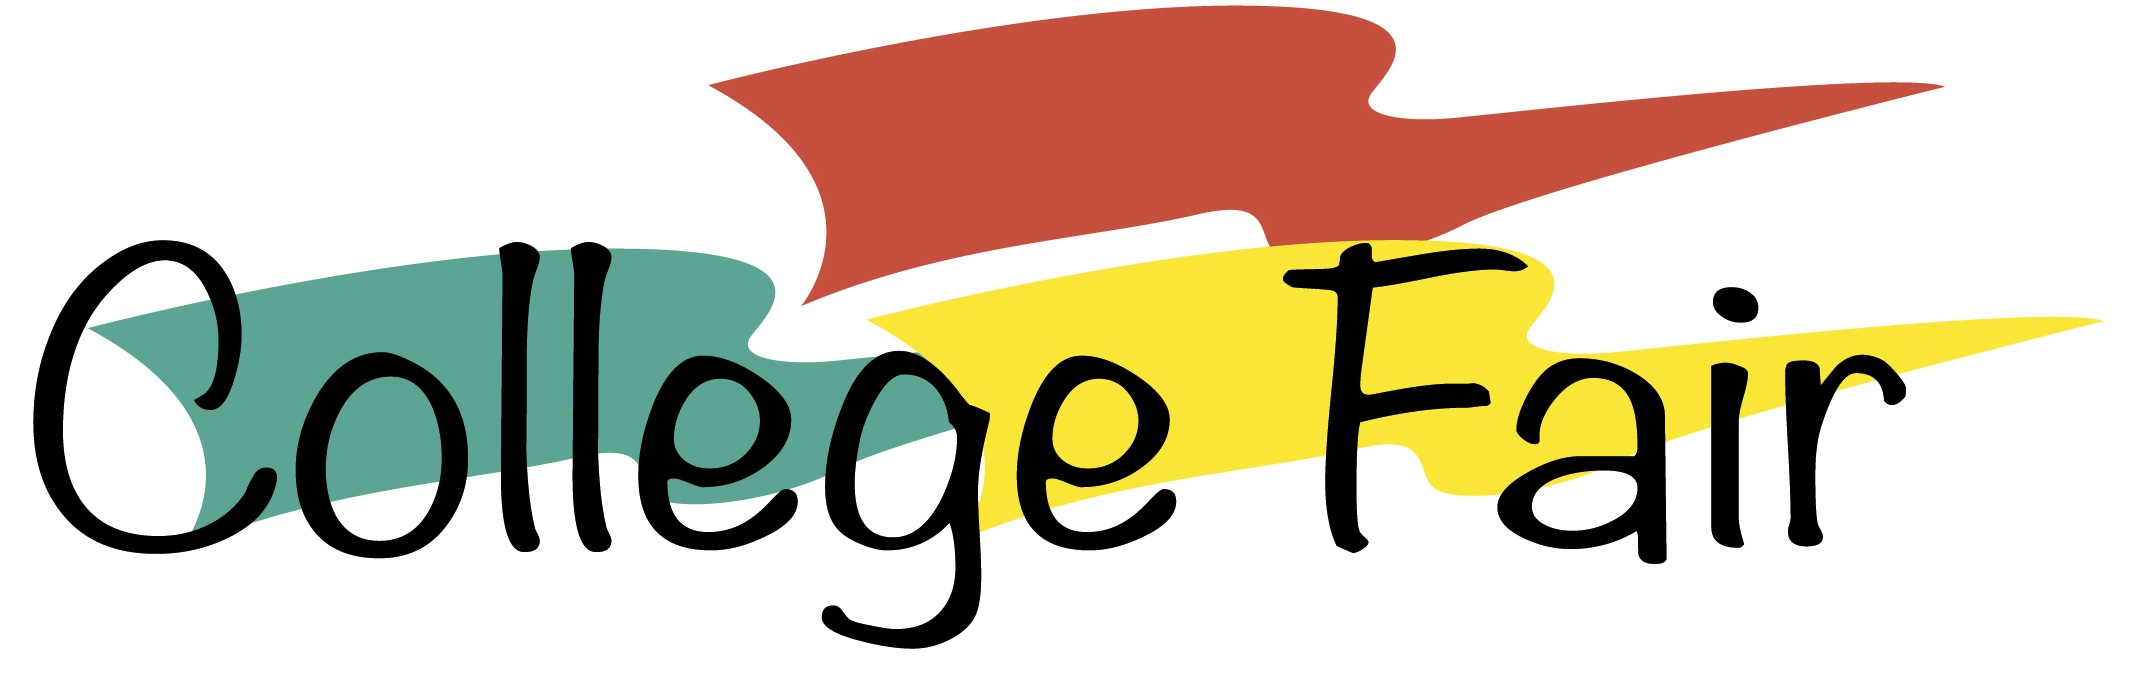 College Logos Images Image Transparent Image Clipart